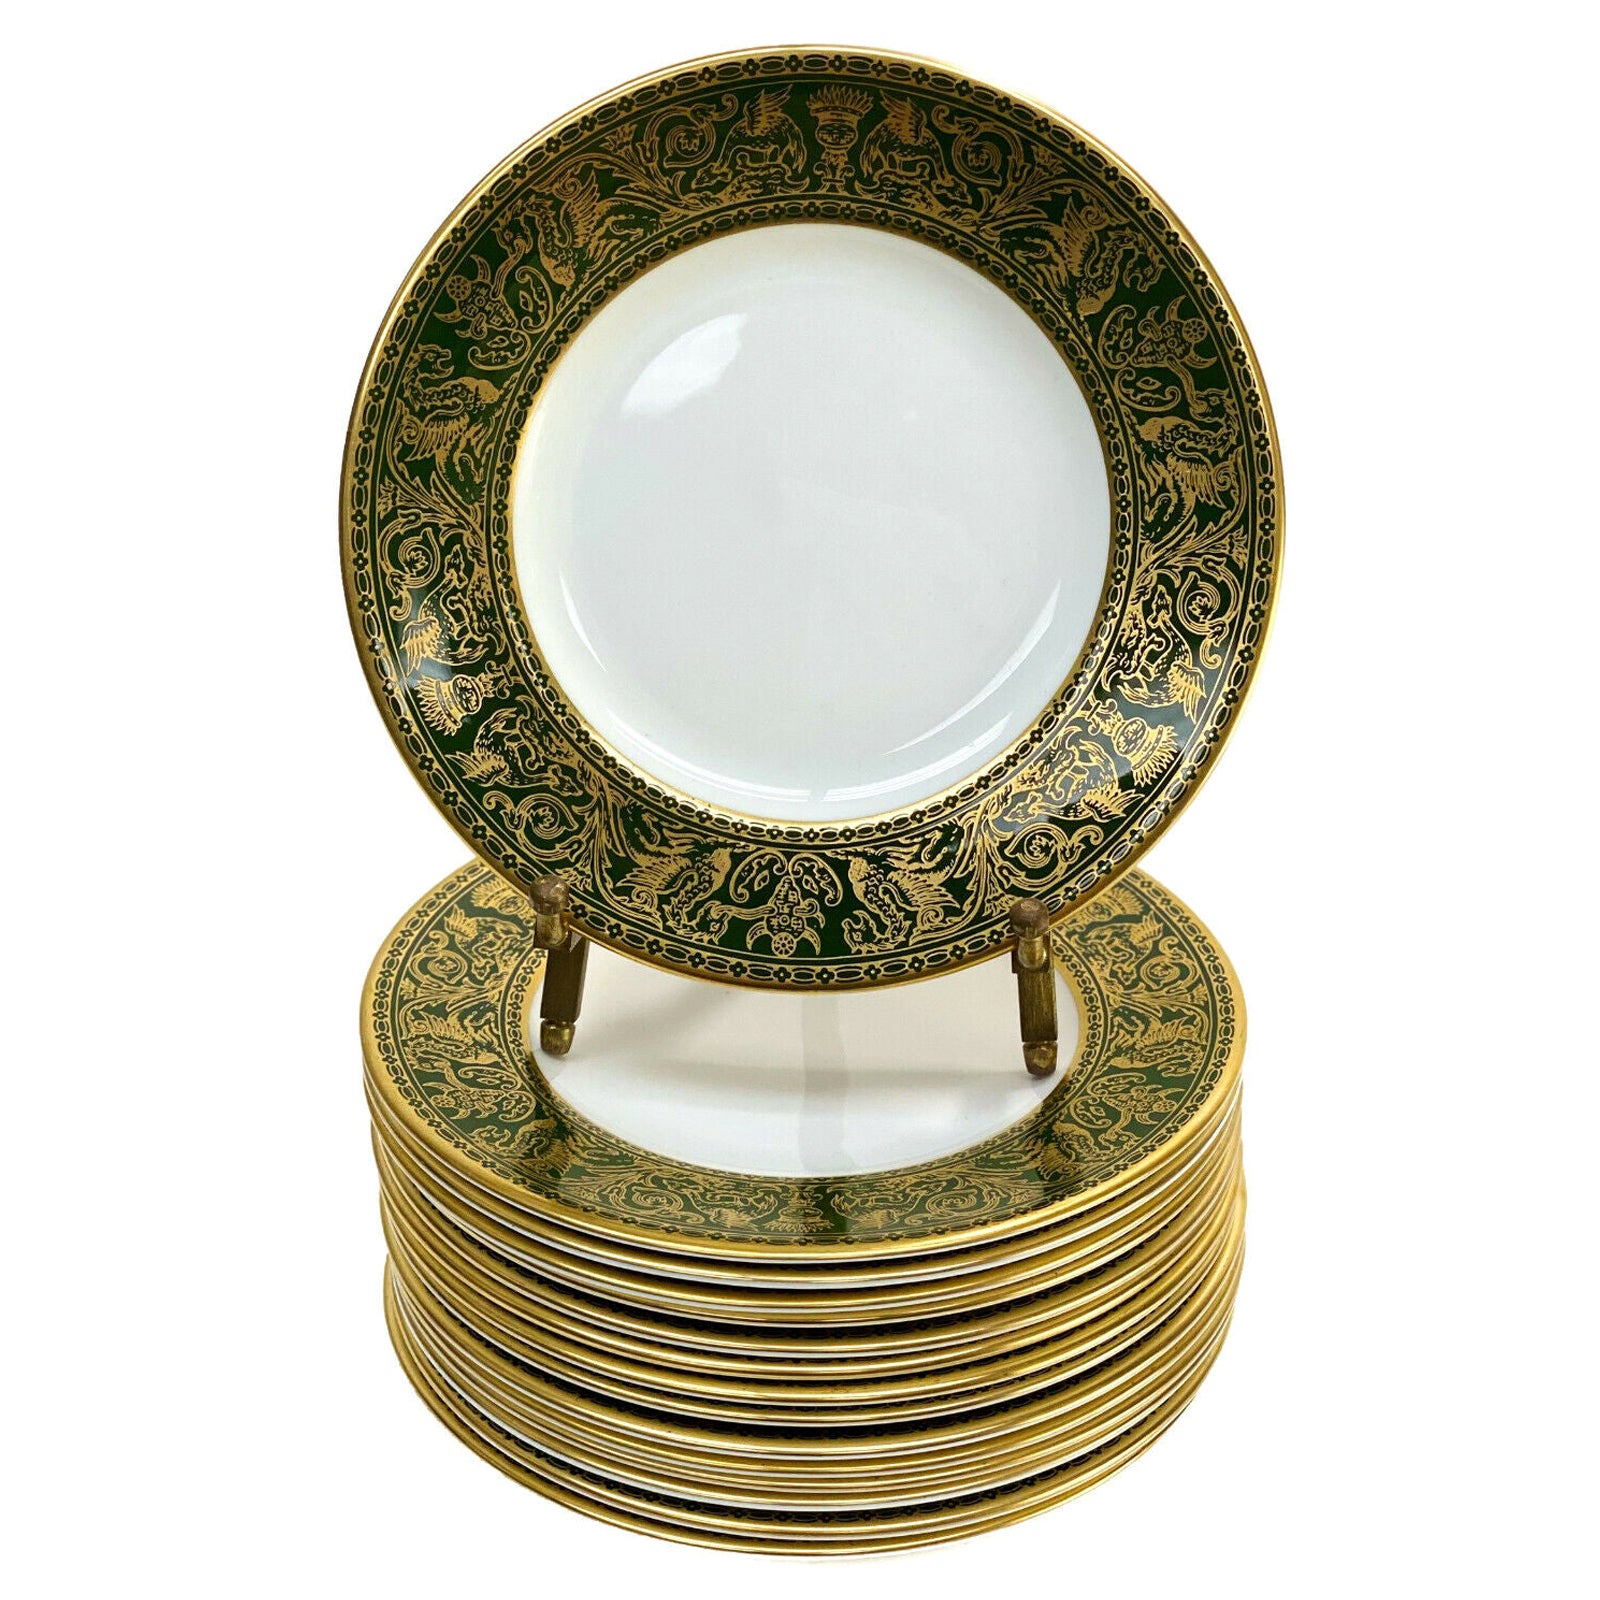 Set of 15 Wedgwood England Porcelain Bread Plates in Green Florentine, c1960